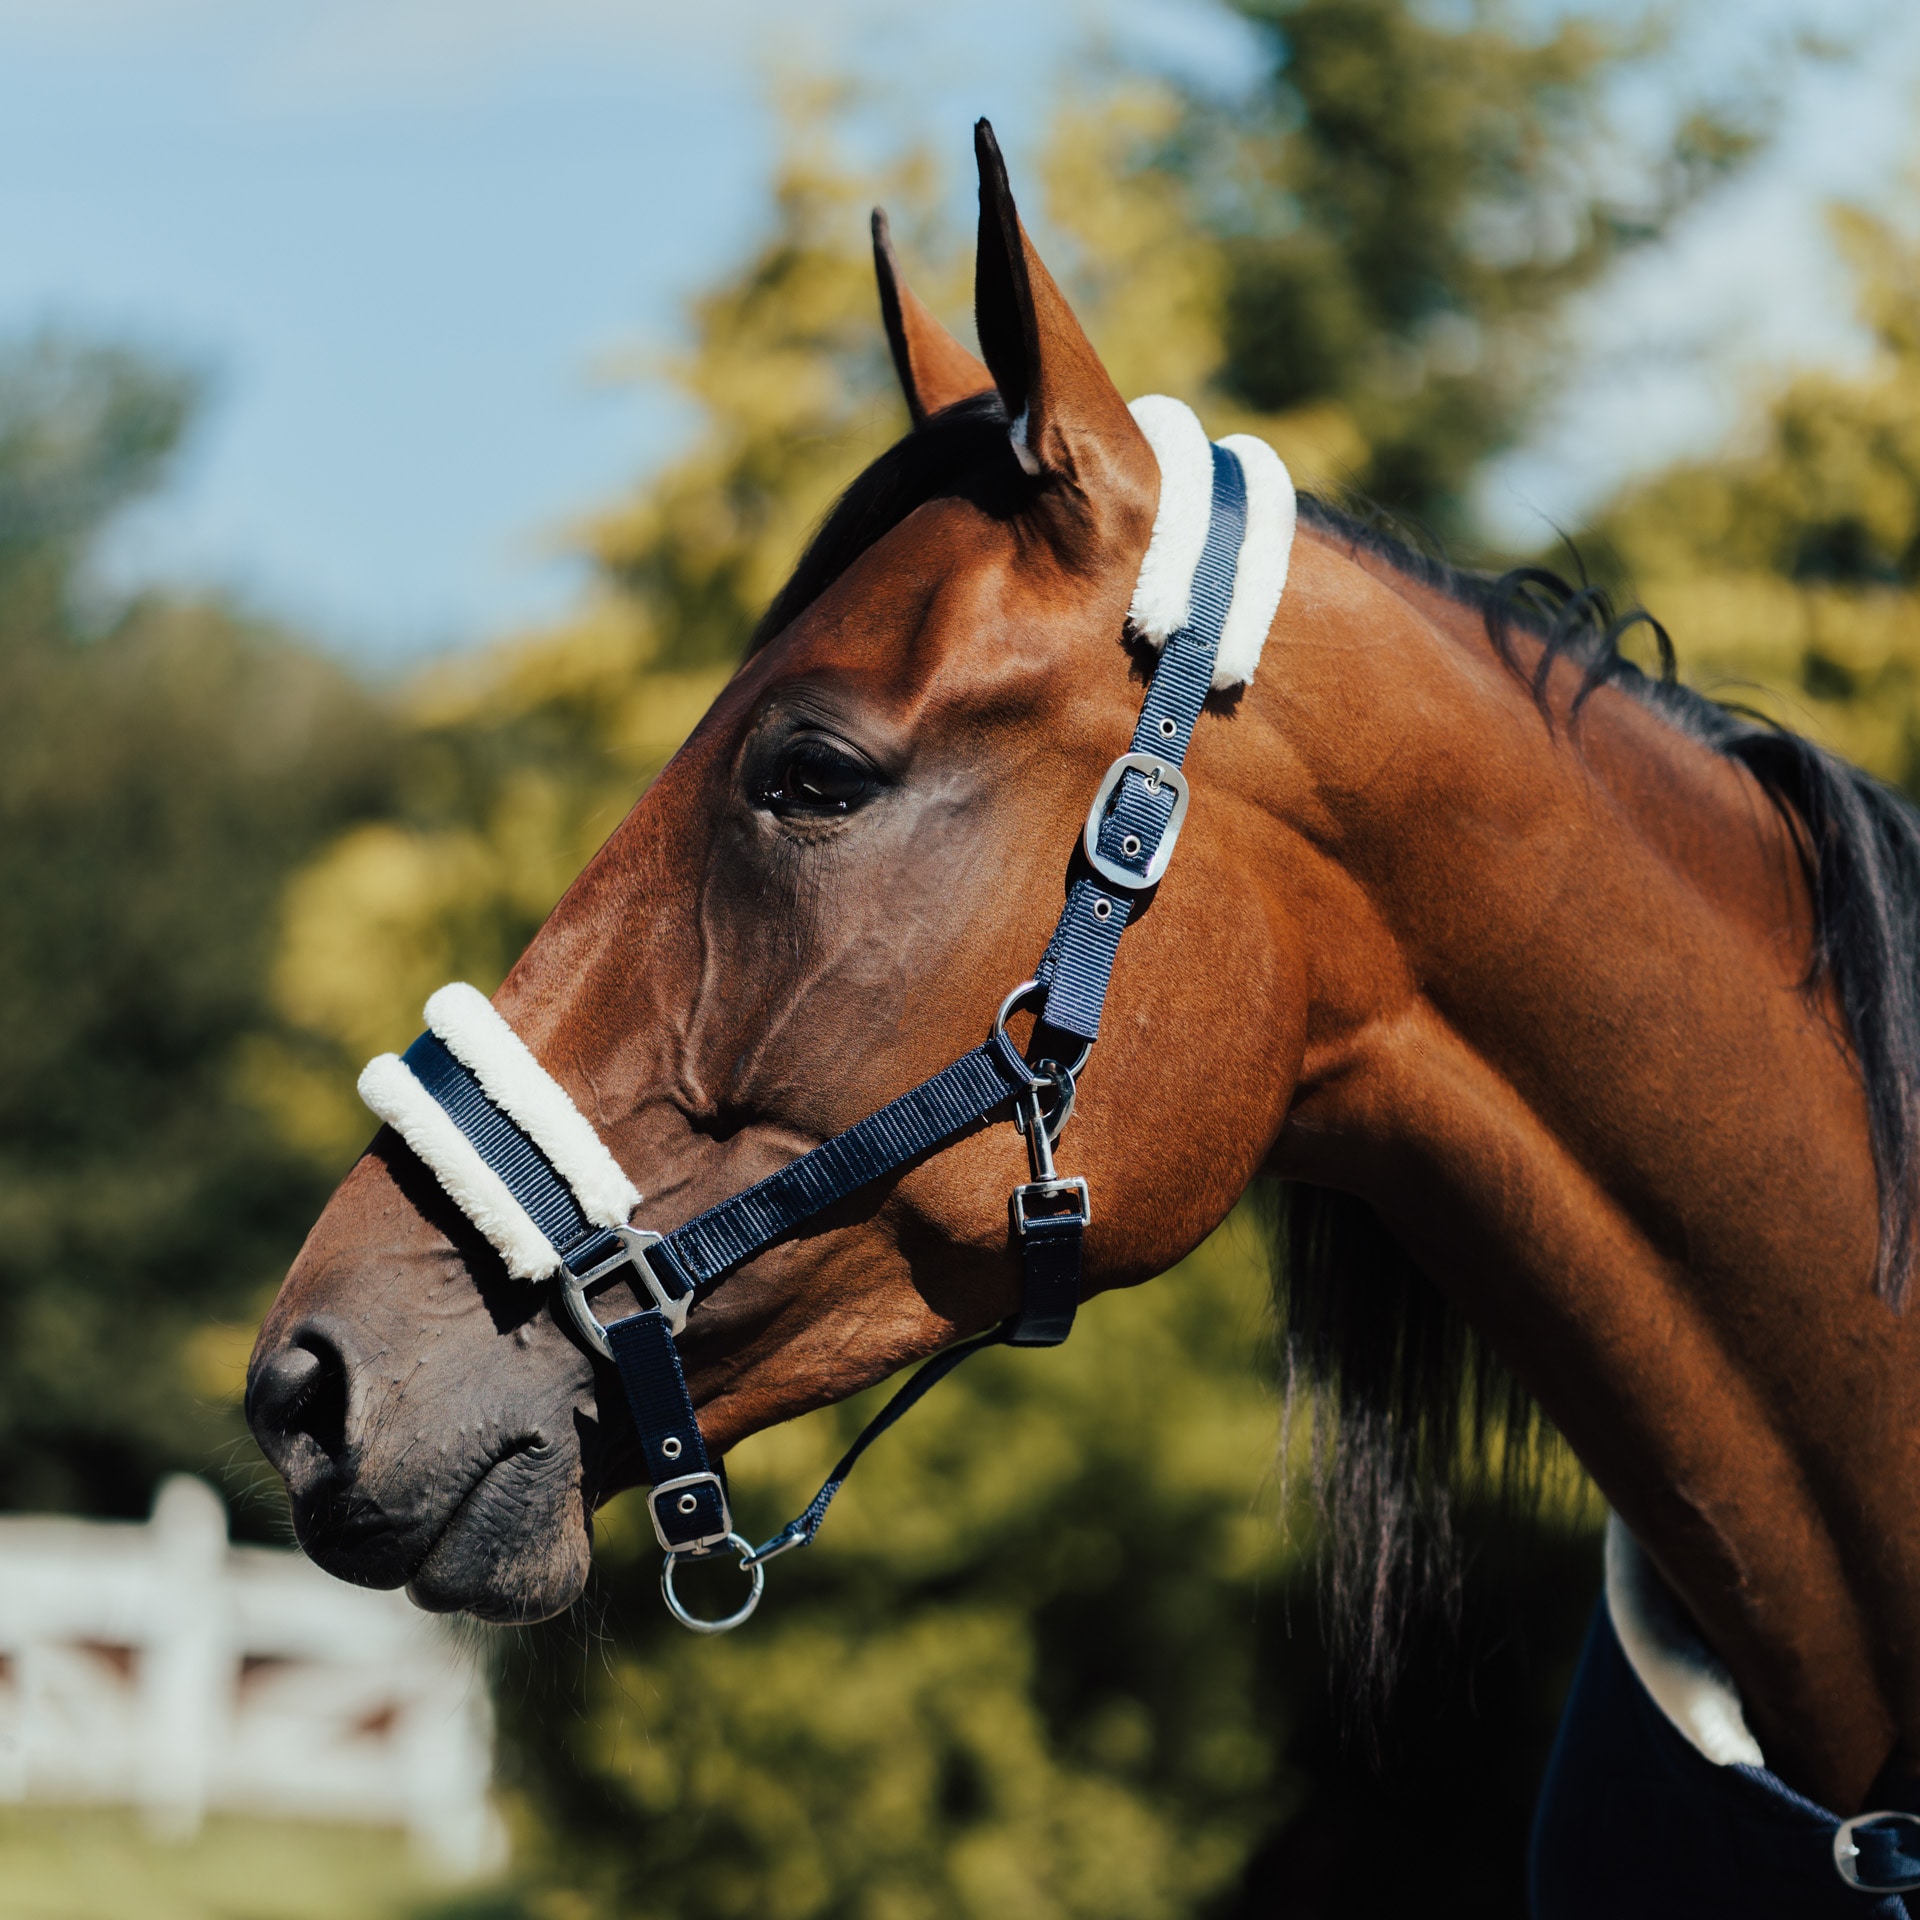 Equestrian Essentials riimu tekoturkisvuorauksella